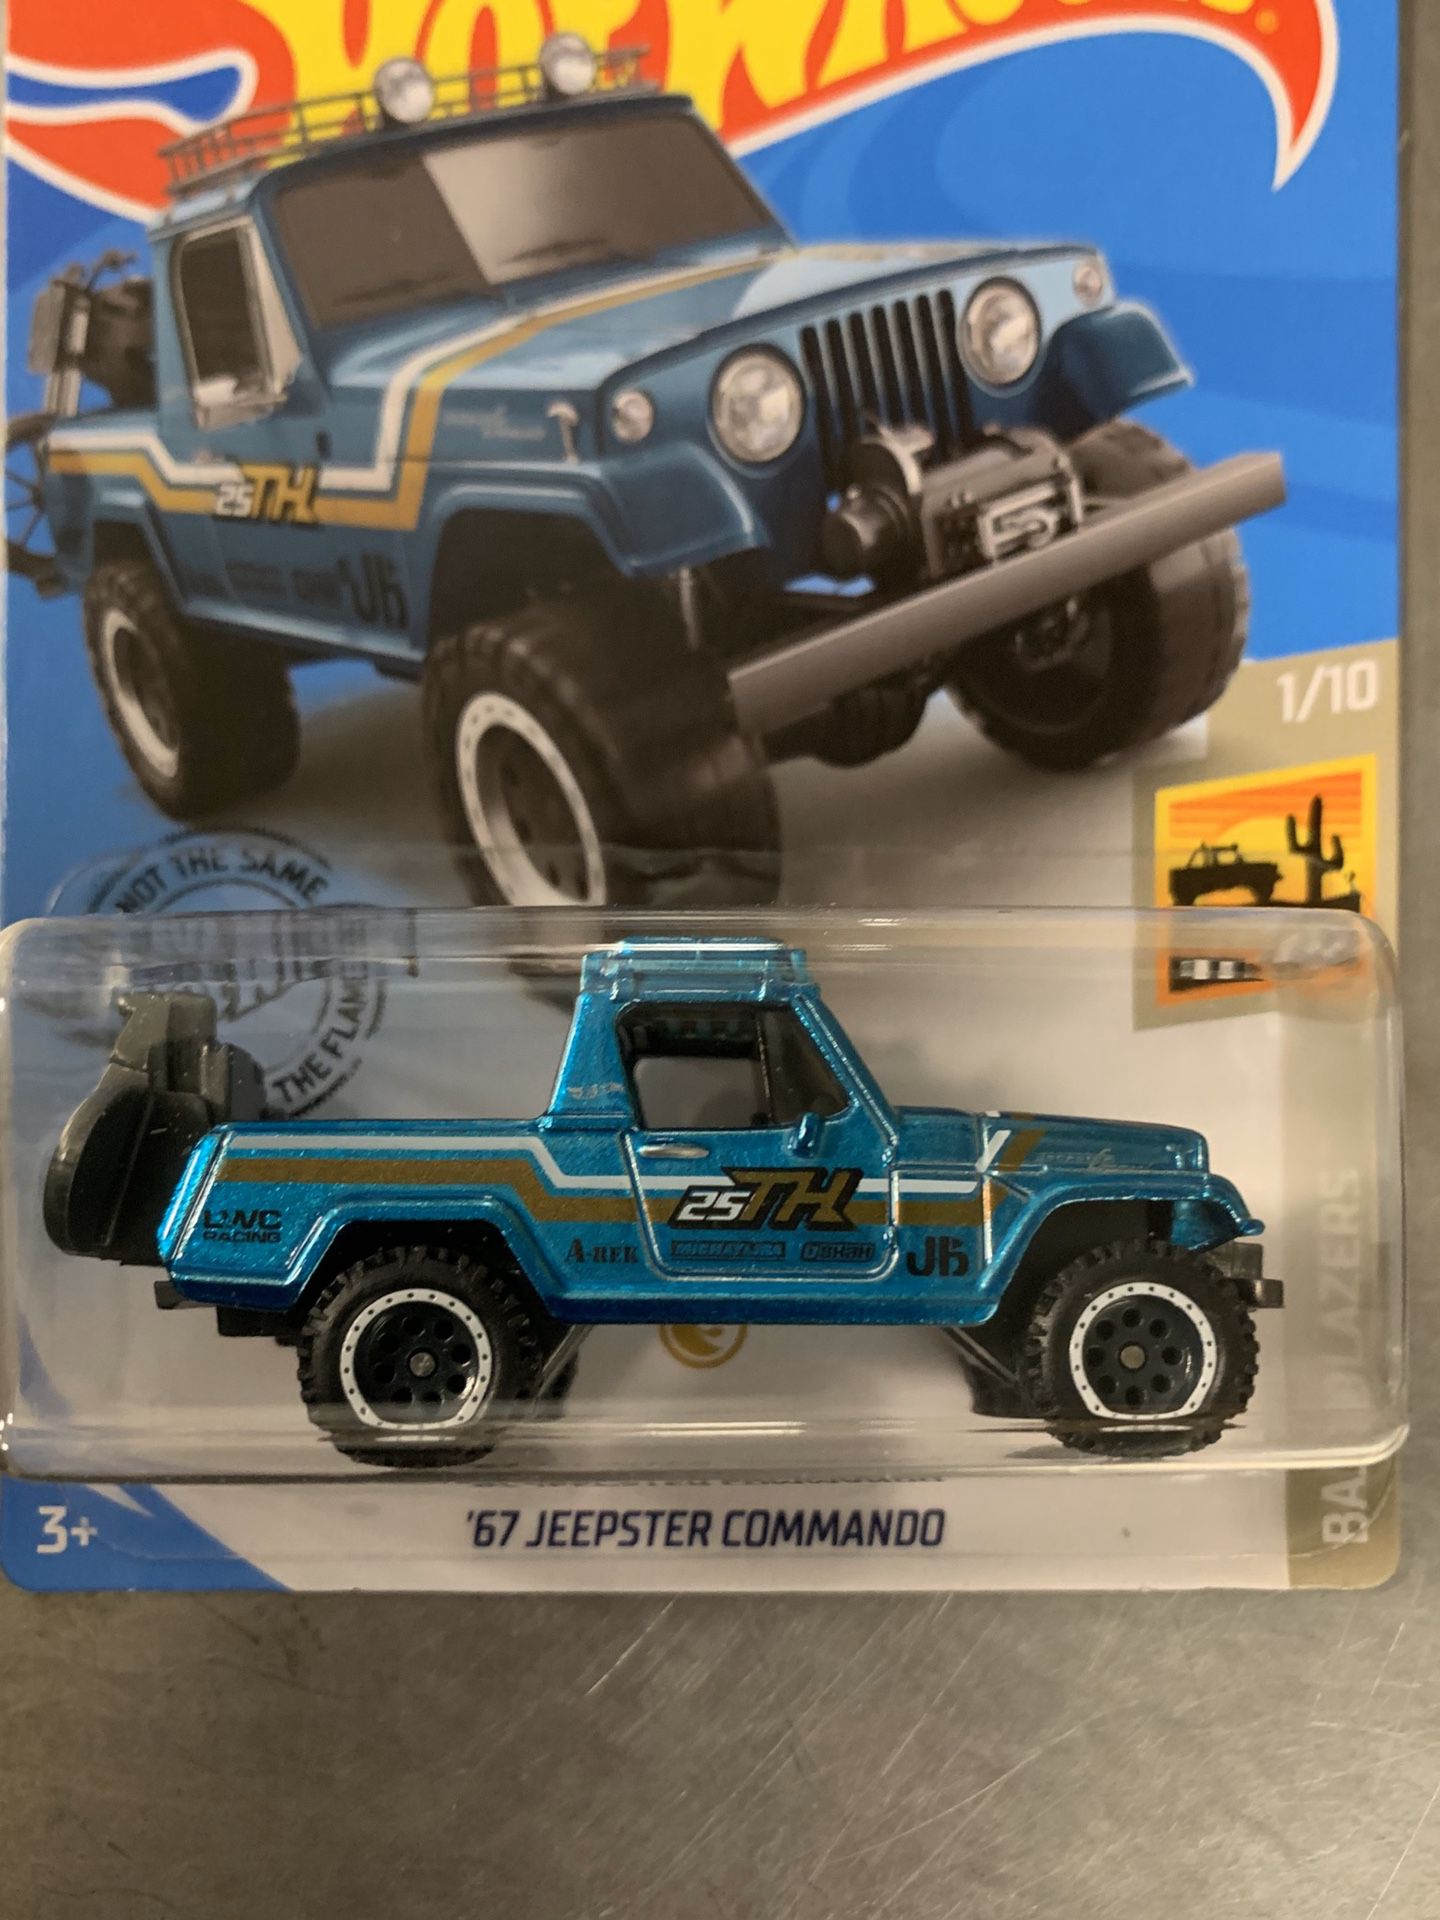 Hot wheels 67 Jeepster Commando Super treasure hunt